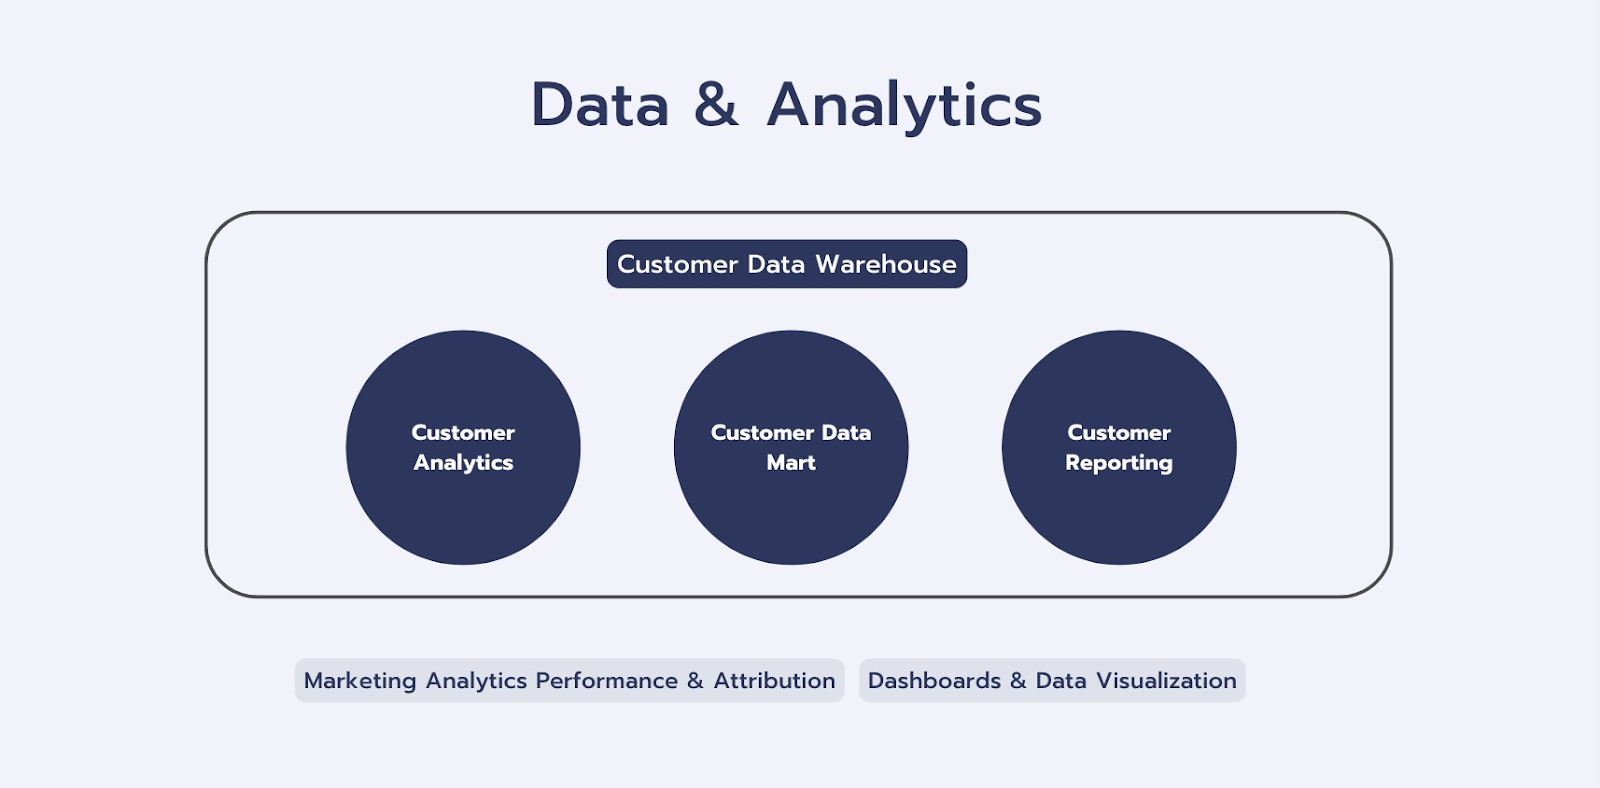 Martech Architecture Data & Analytics Process